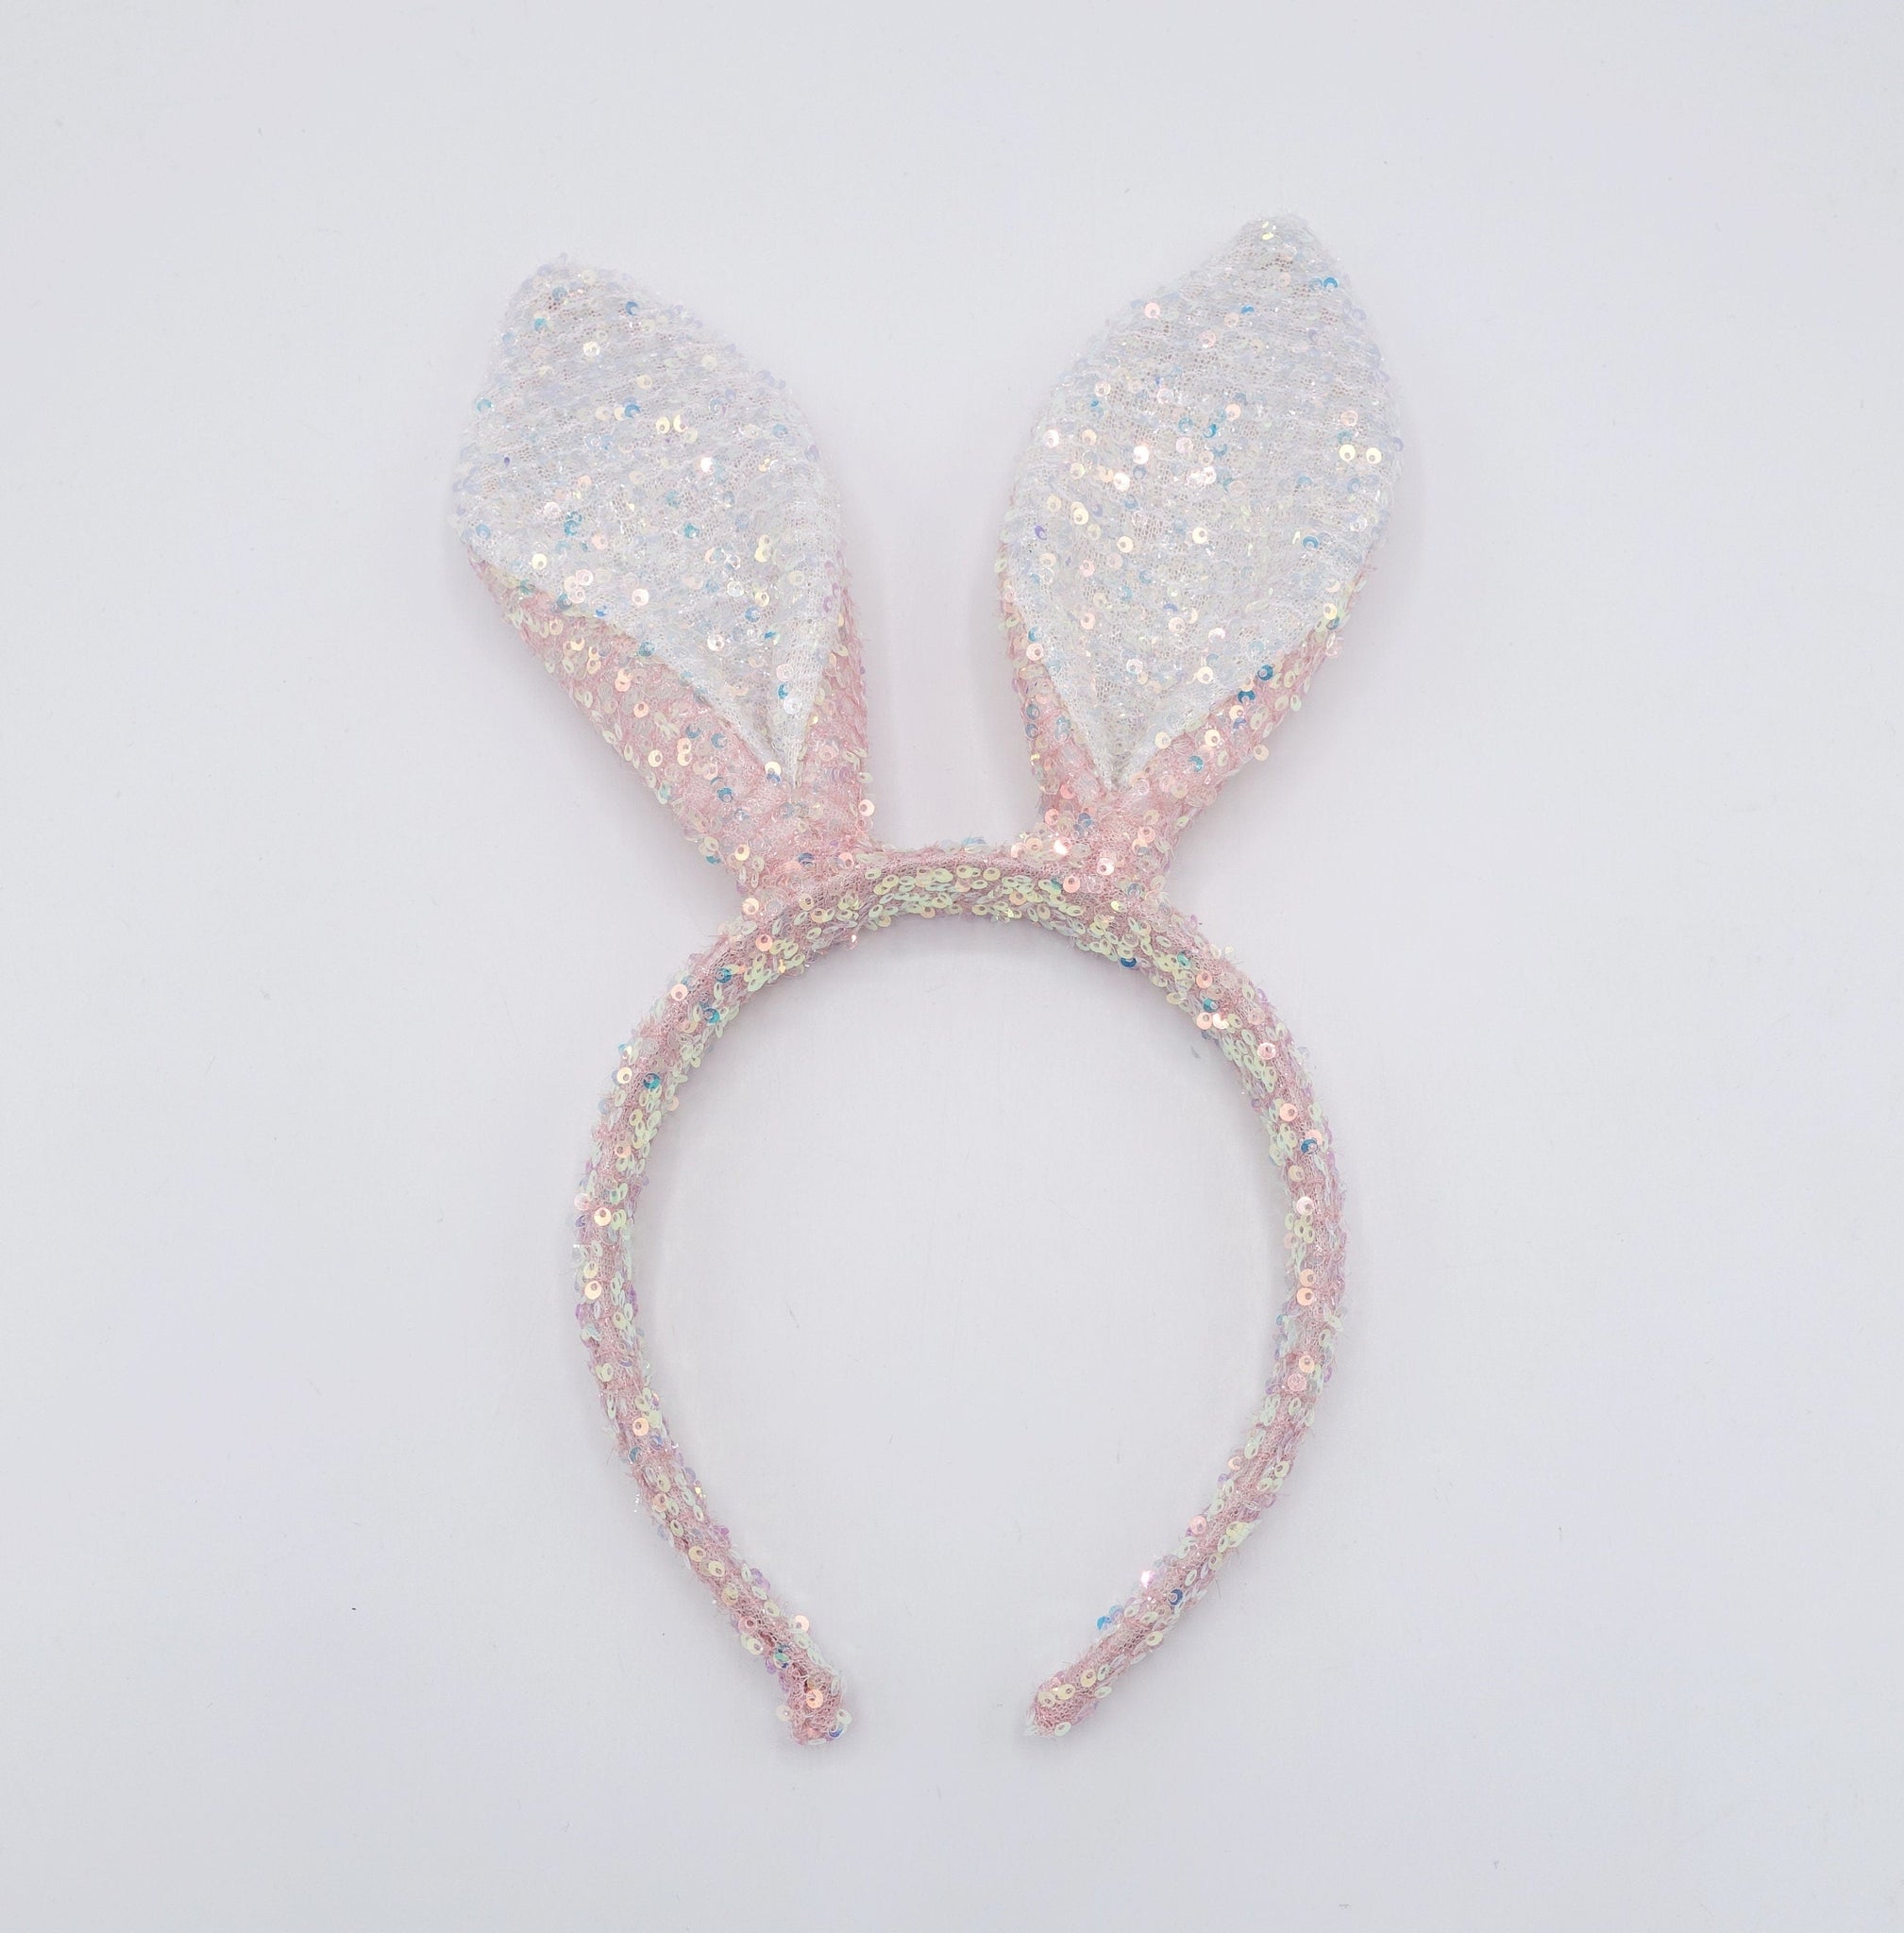 veryshine.com Headband sequin spangle bunny ear headband for a girl